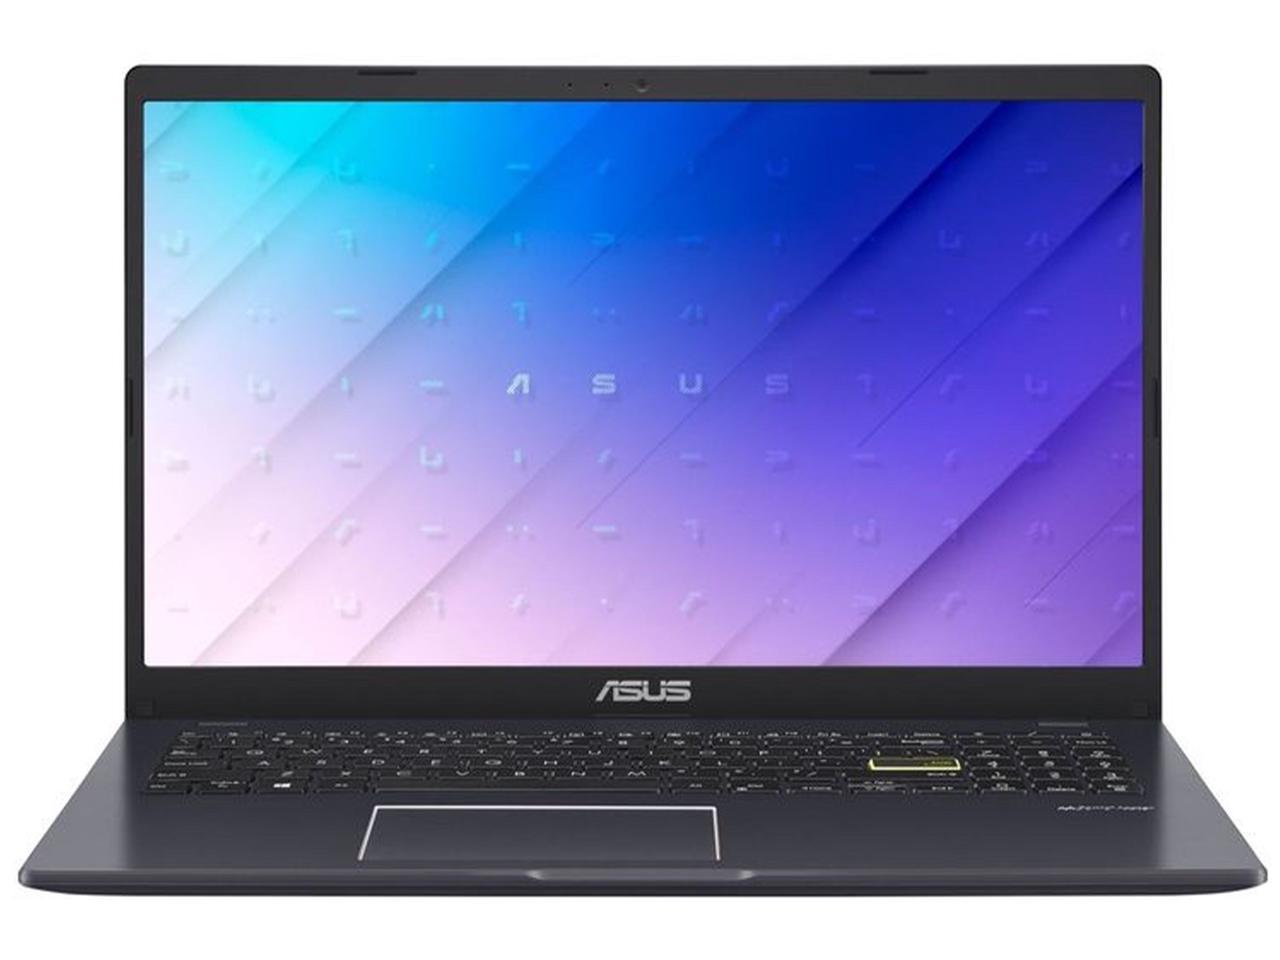 ASUS Laptop L510 Ultra Thin Laptop, 15.6&quot; FHD Display, Intel Celeron N4020 Processor, 4GB RAM, 64GB Storage, Windows 10 Home in S Mode, 1 Year Microsoft 365, Star Black, L510MA-DB02 - Newegg.com